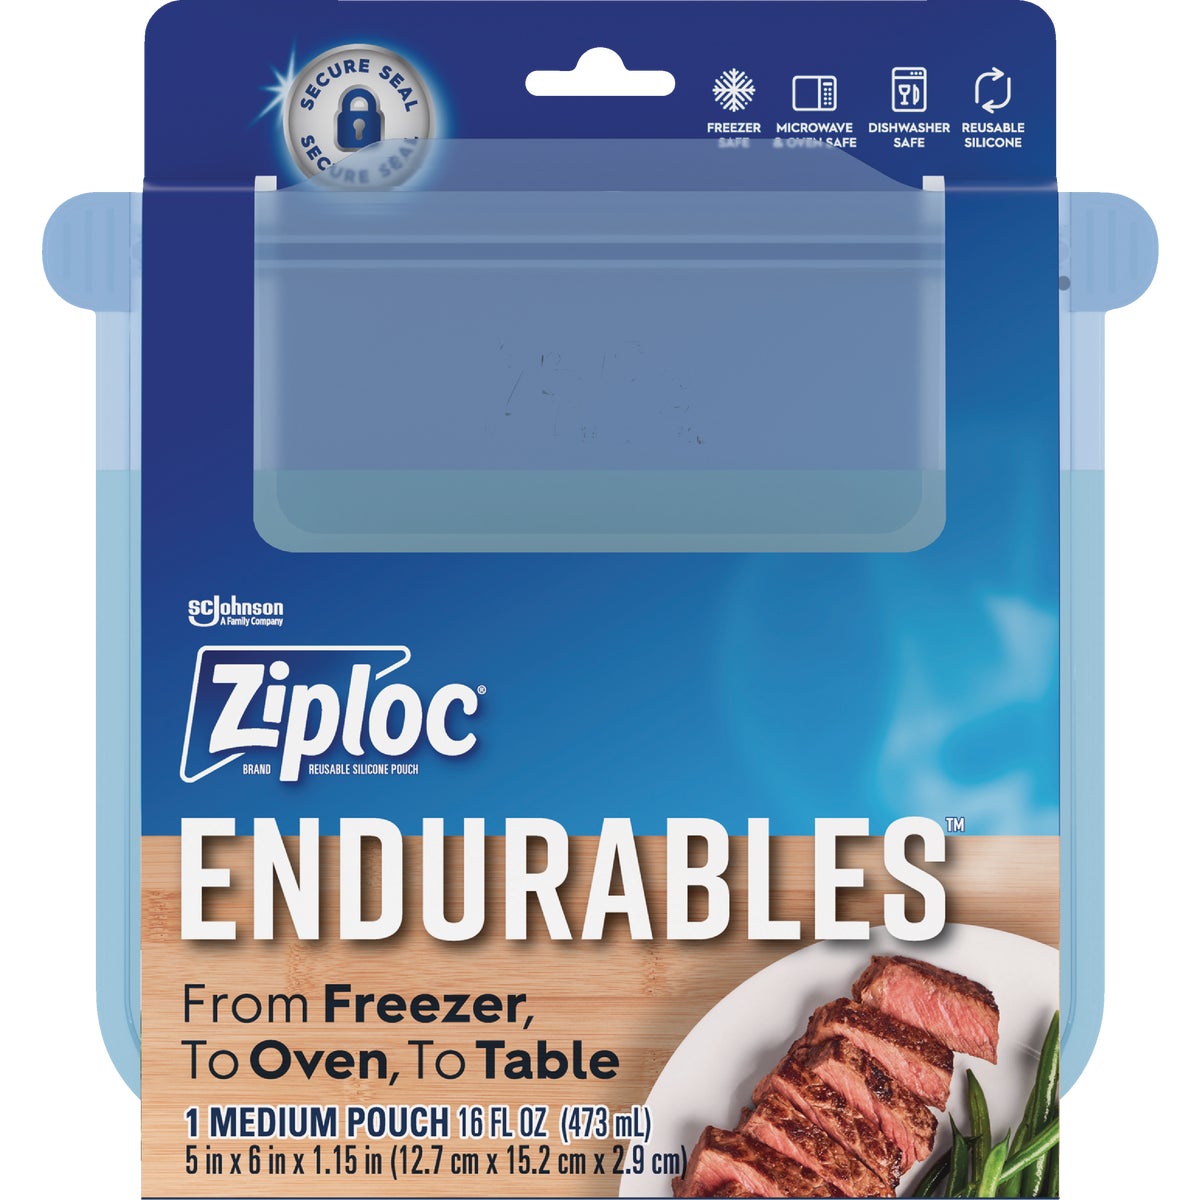 Ziploc Endurables 2-Cup Medium Pouch Food Storage